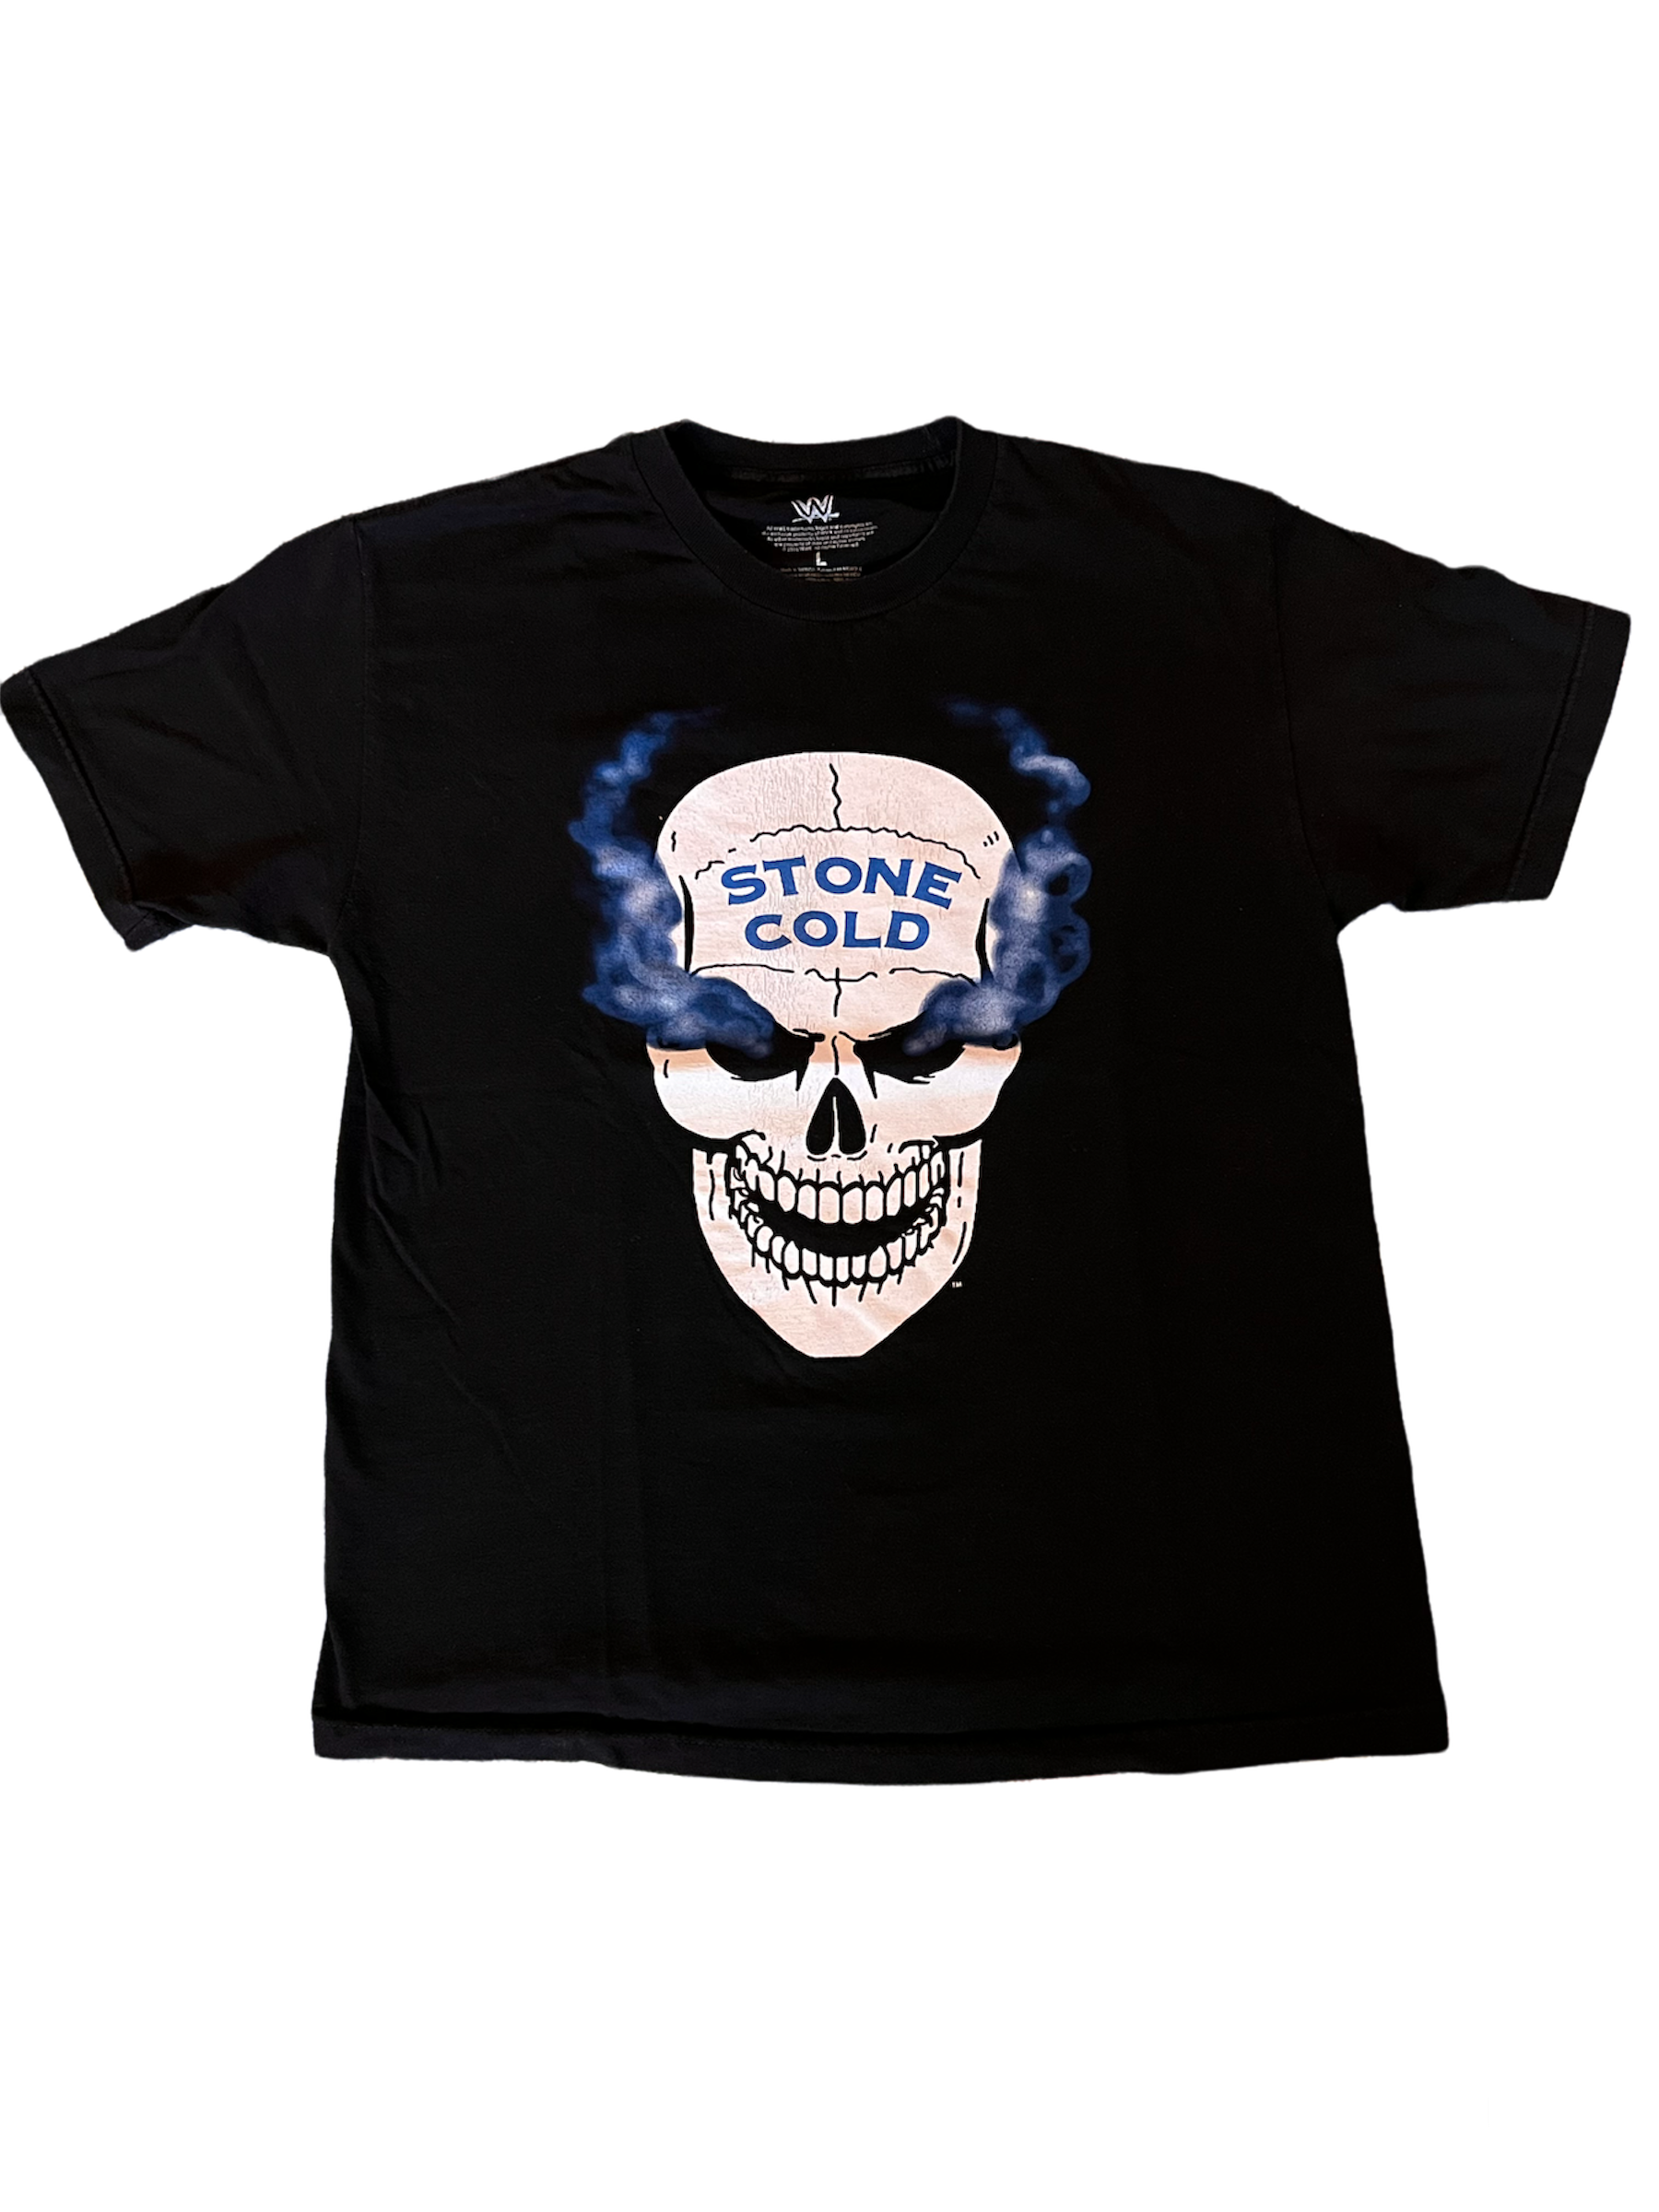 Stone Cold Steve Austin 3 16 Shattered Unisex Shirt - Reallgraphics